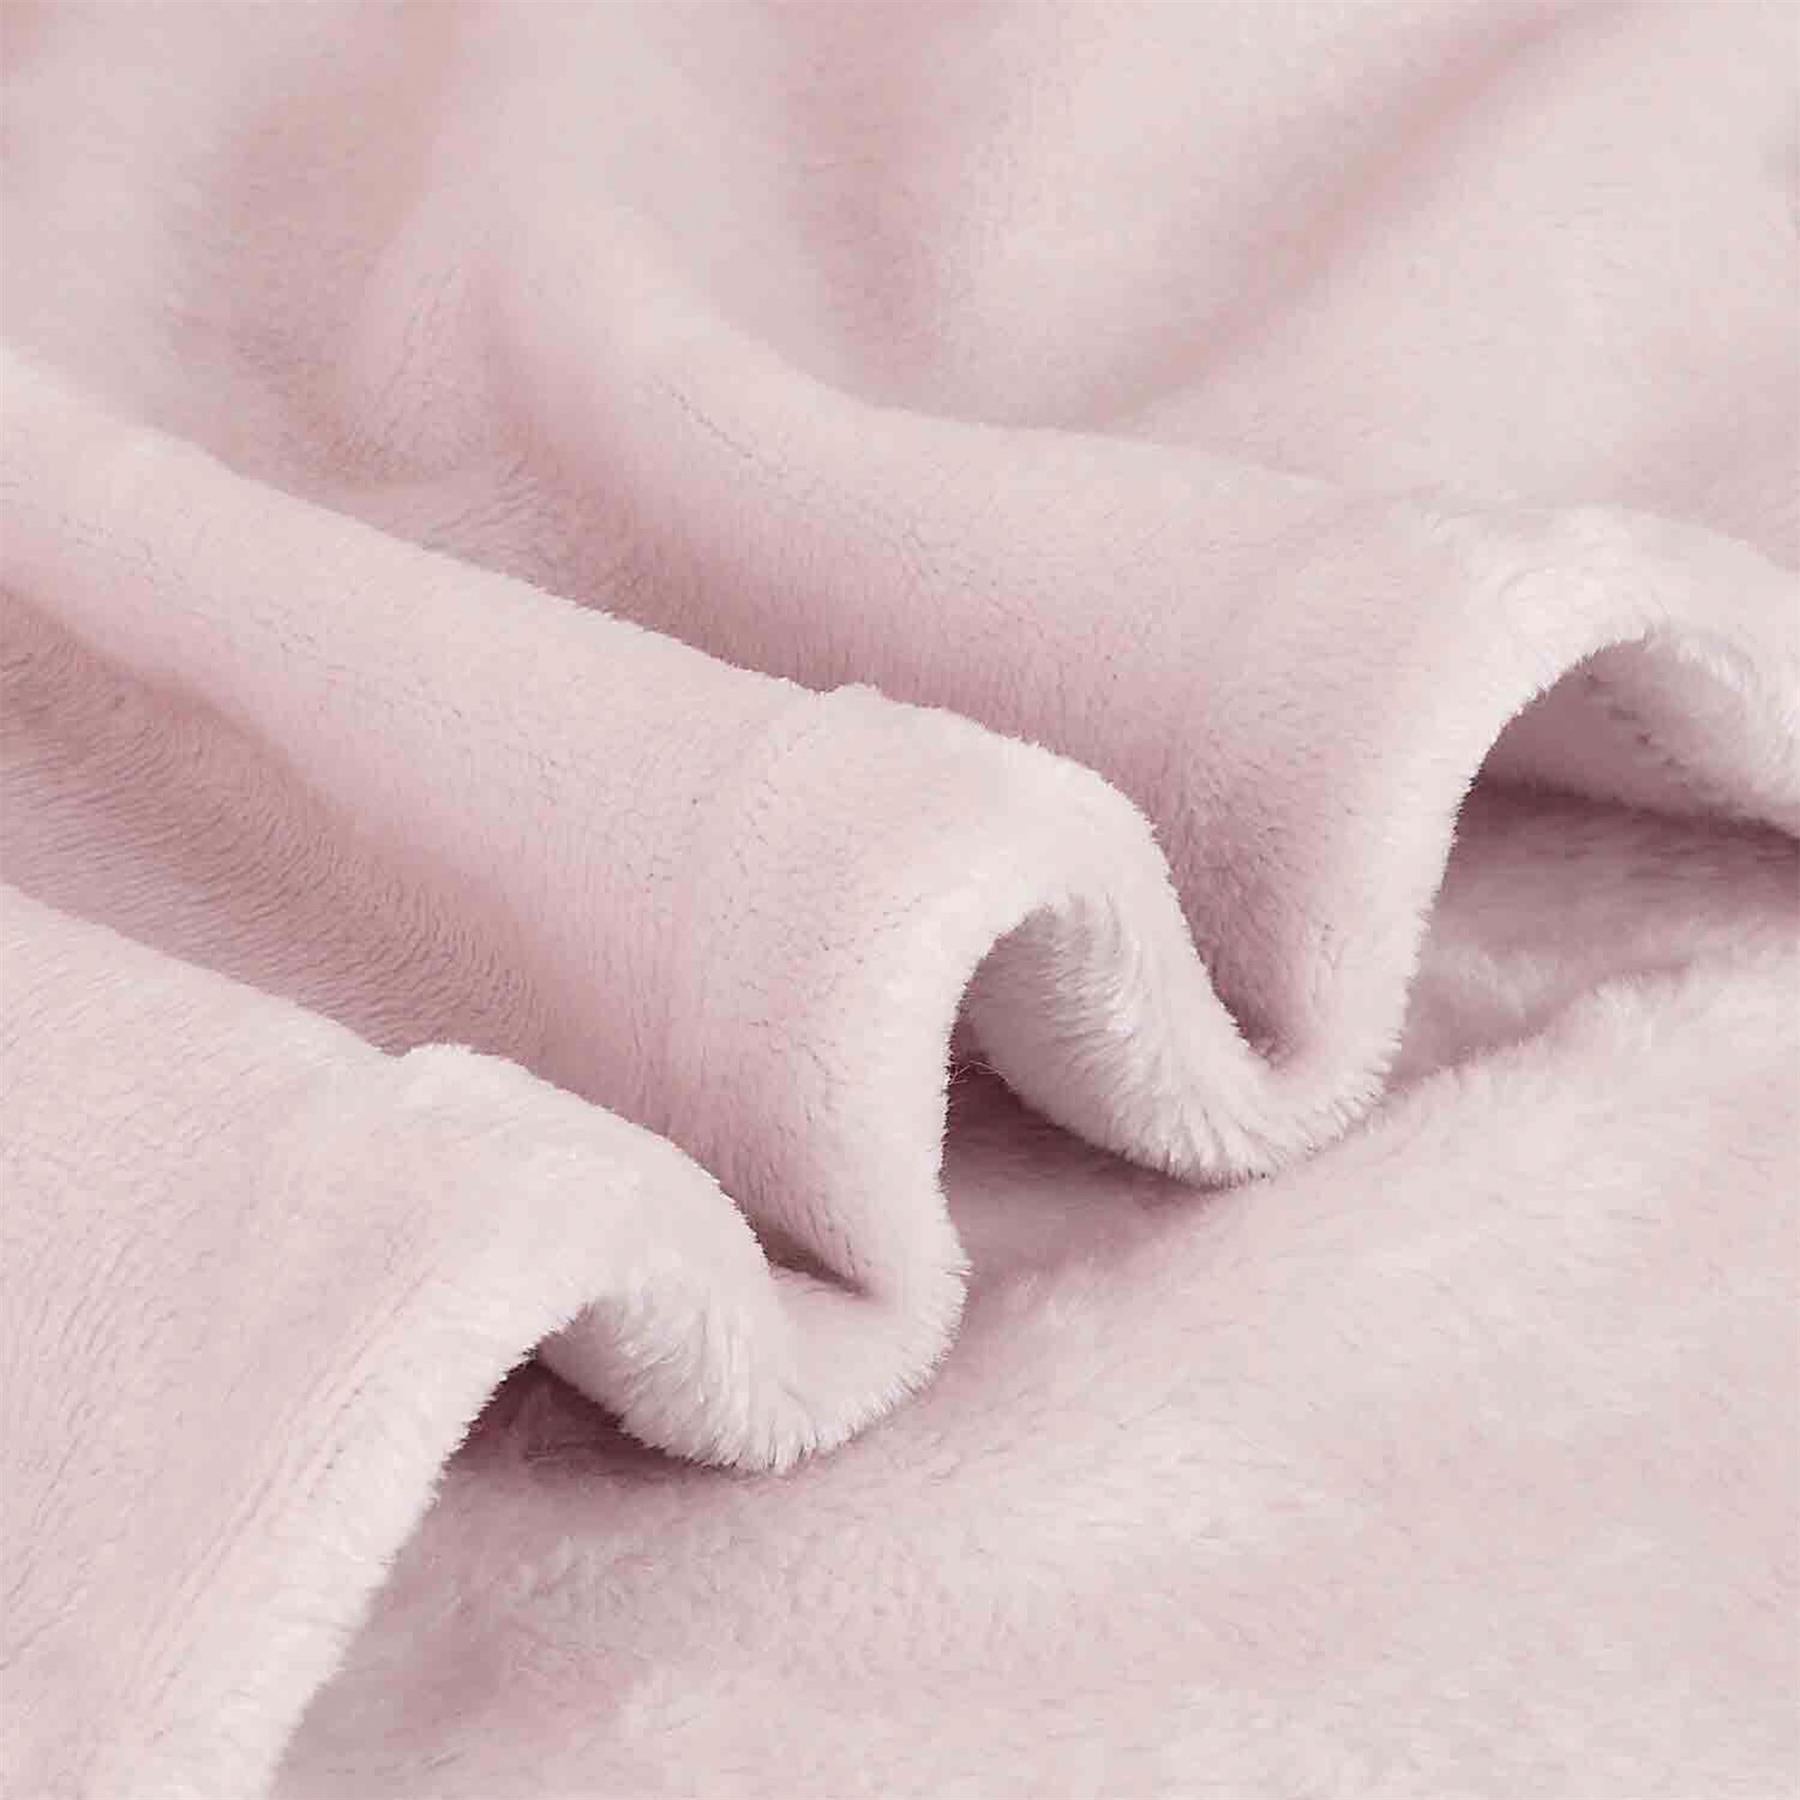 Kids Unisex Oversized Hoodie Baby Pink Snuggle Blanket Super Soft Warm Fleece